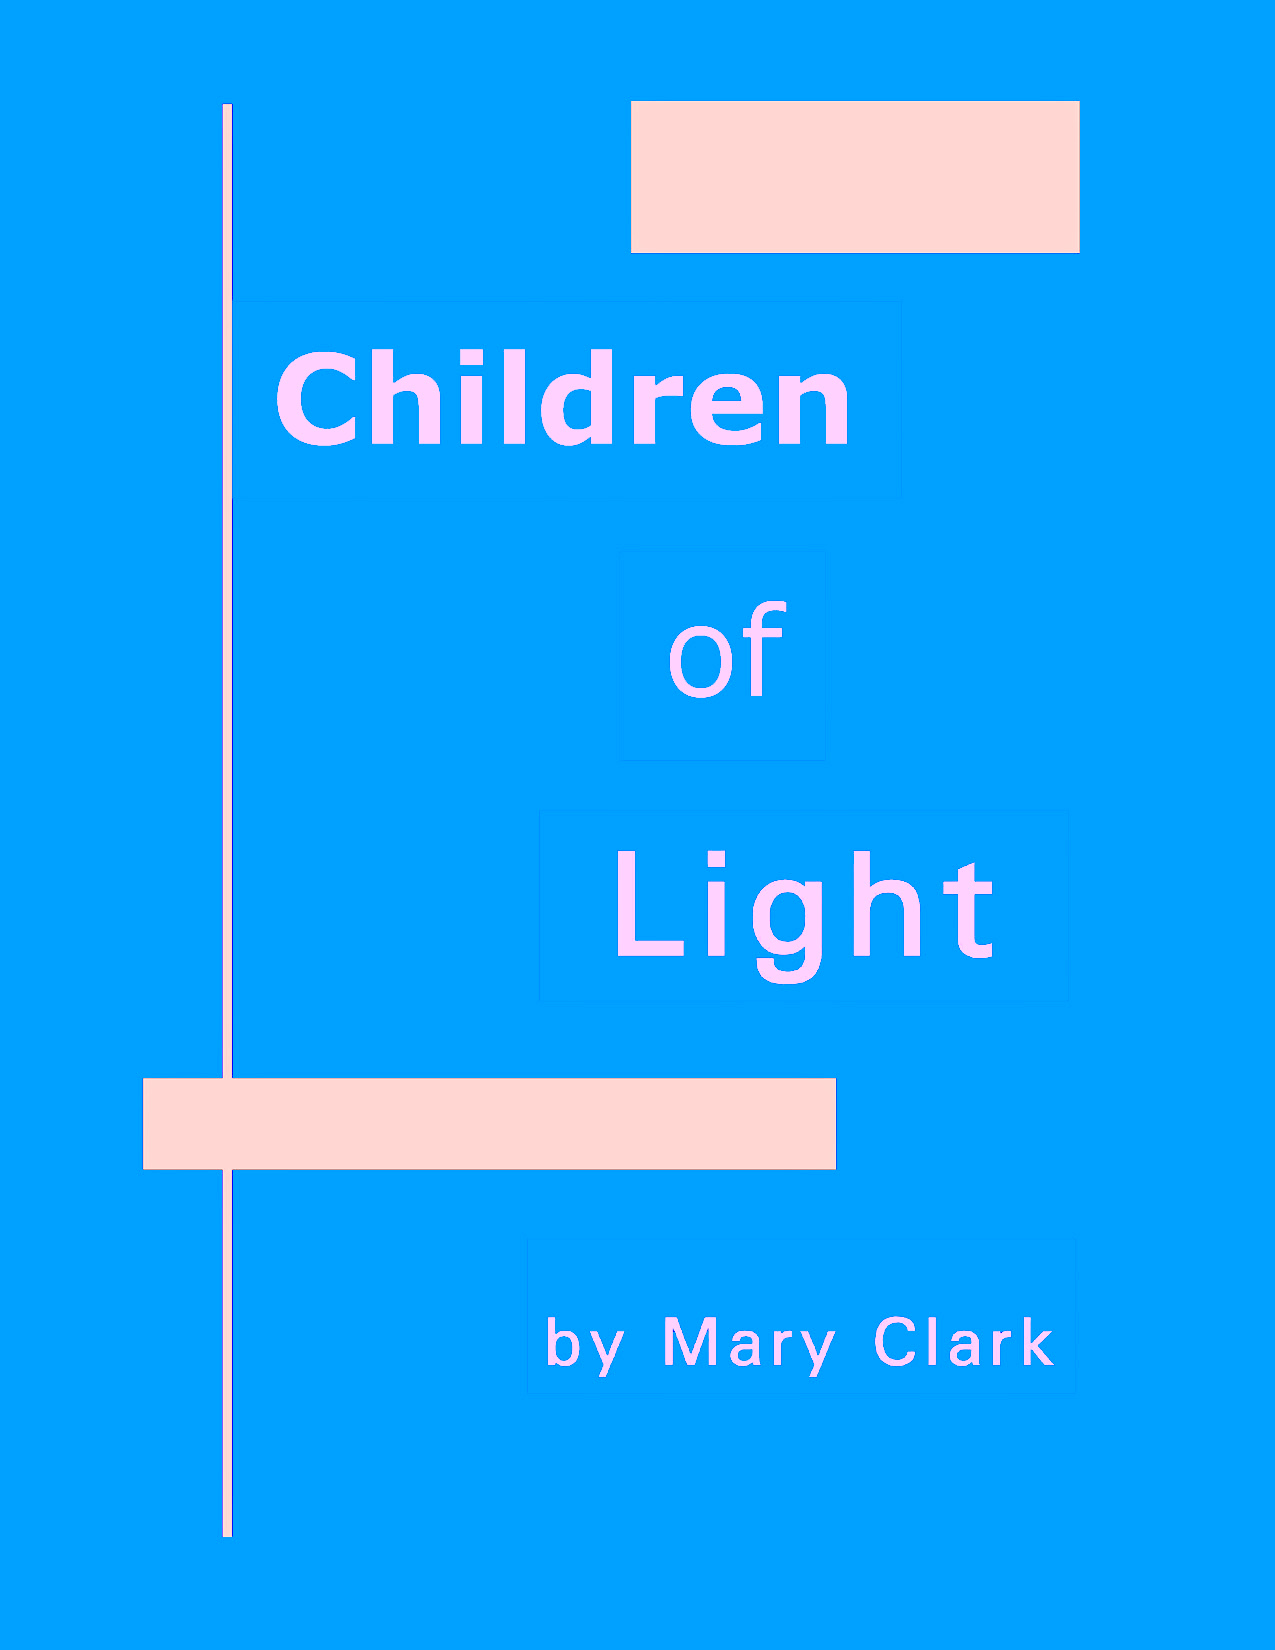 Children of Light by Mary Clark